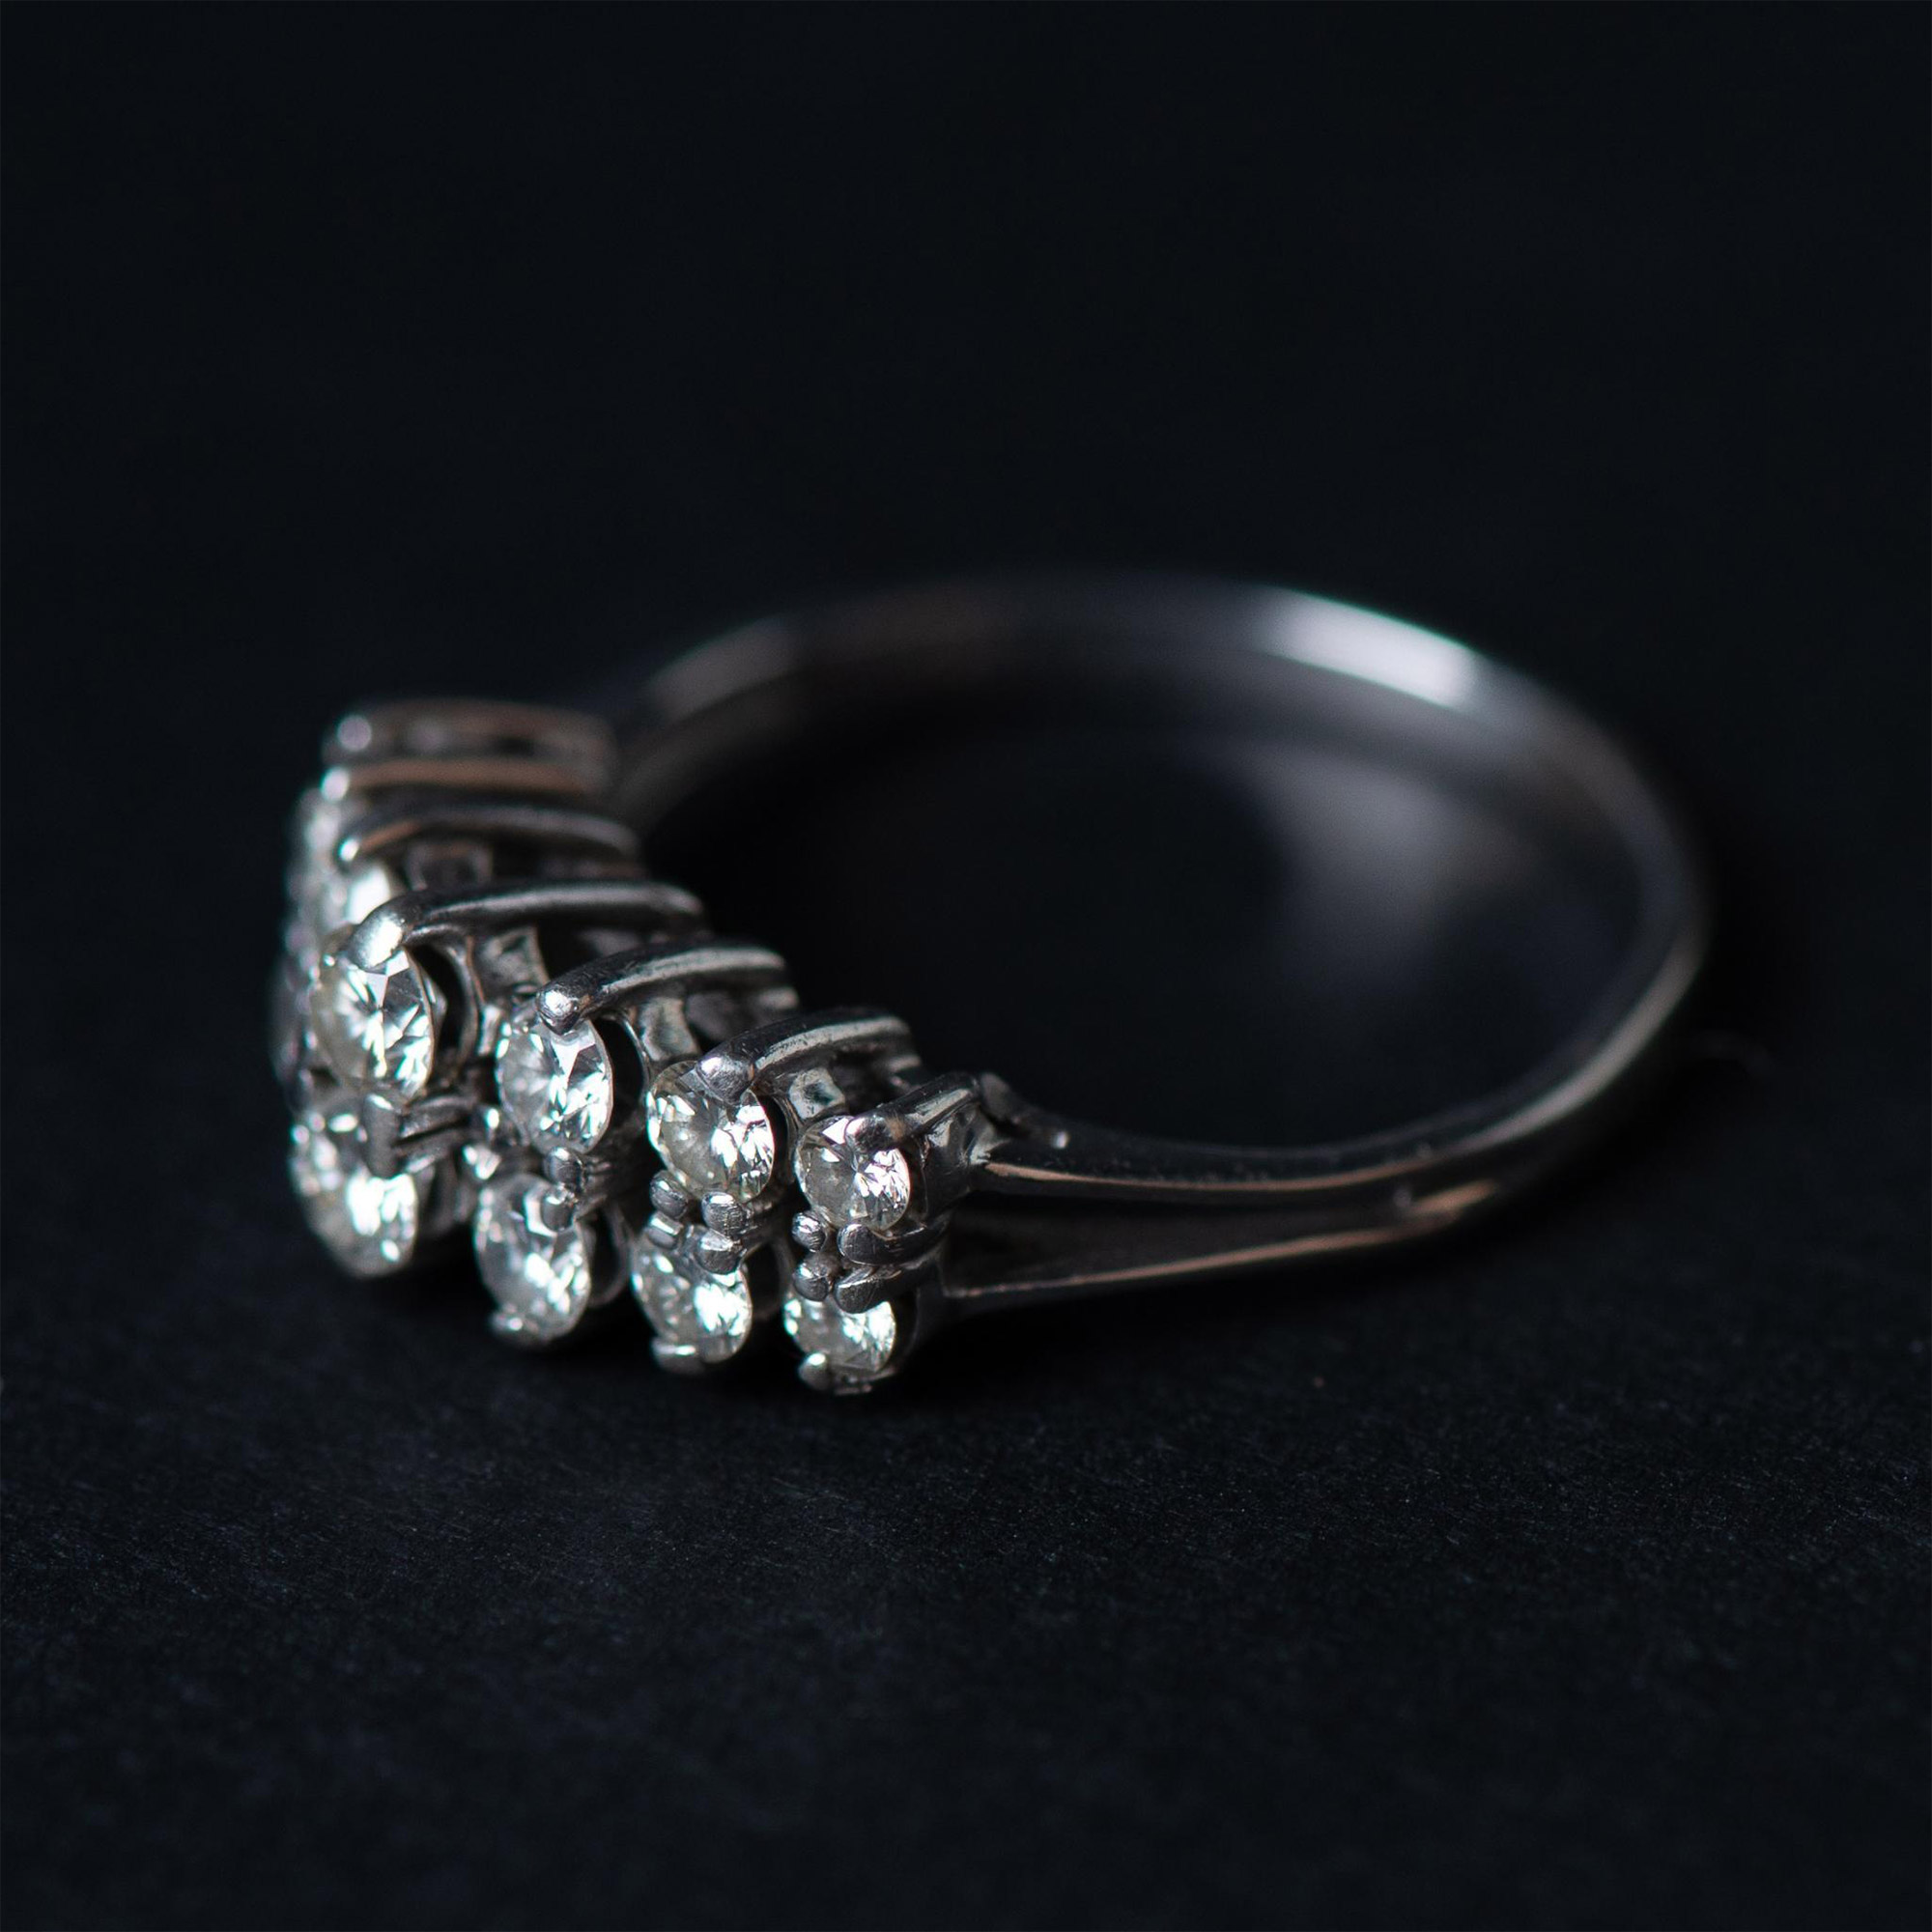 Stunning 14K White Gold and Graduated Diamond Ring - Image 2 of 4